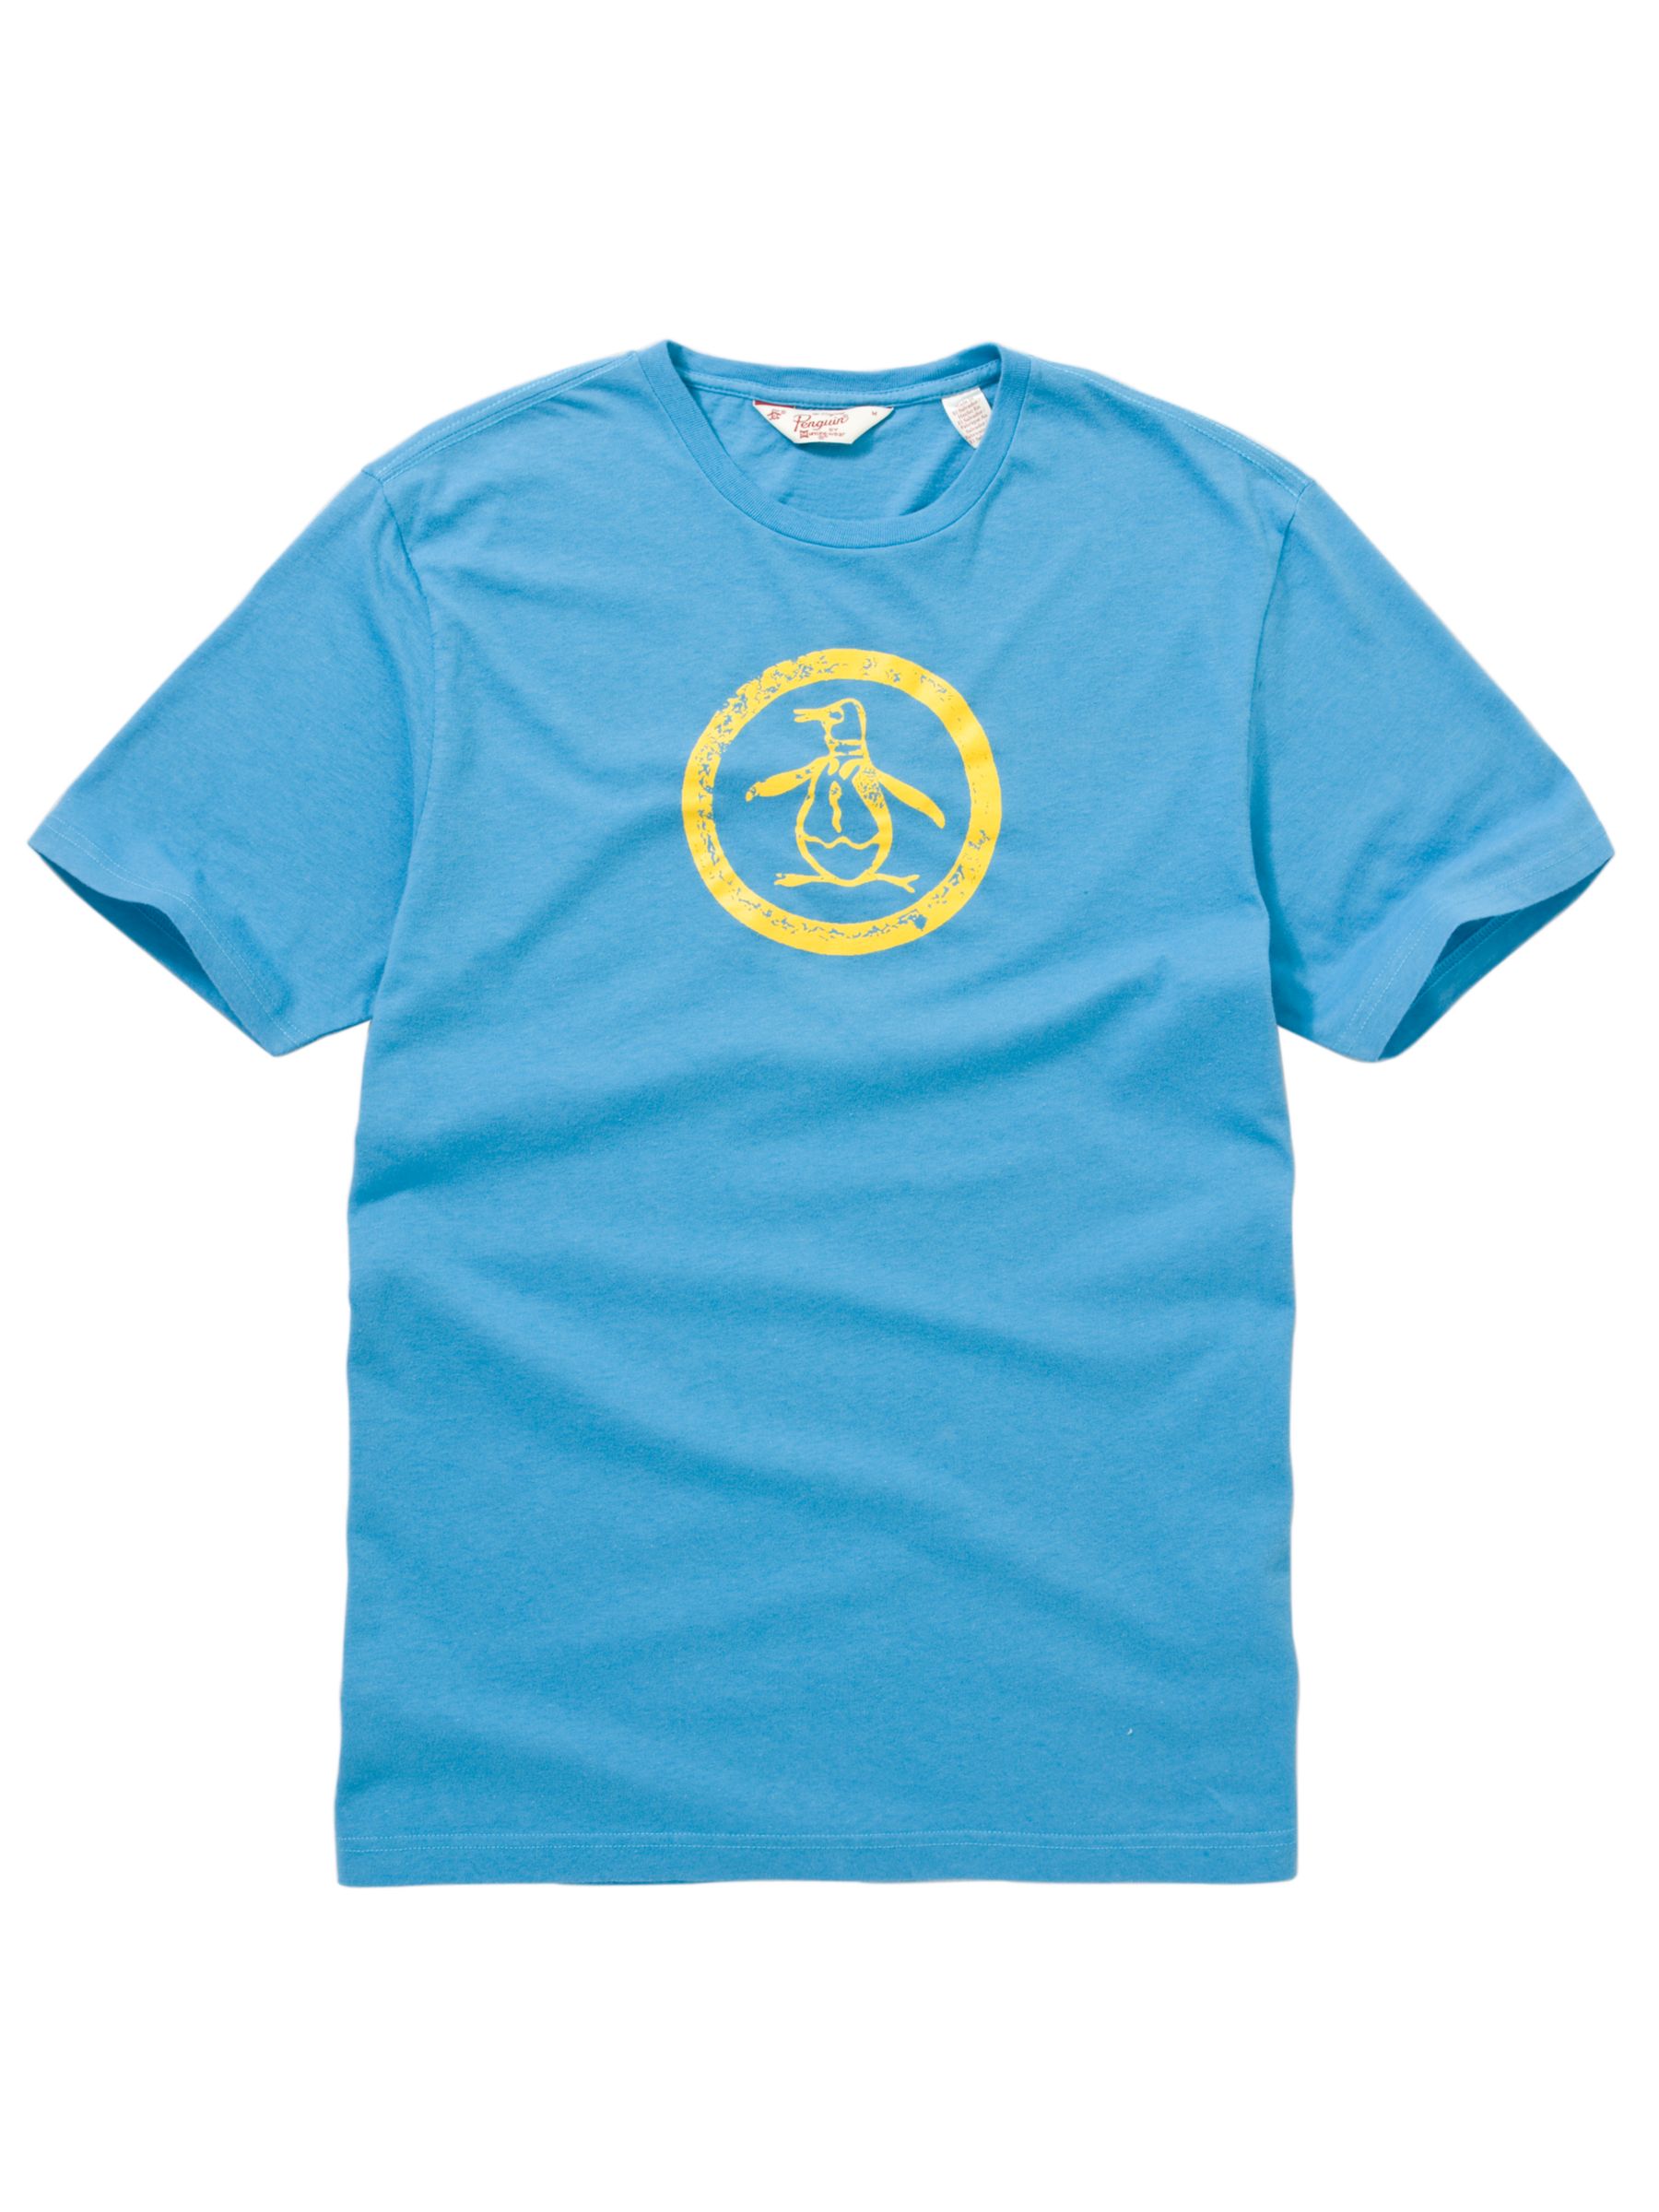 Original Penguin Circle Logo T-Shirt, Bright blue